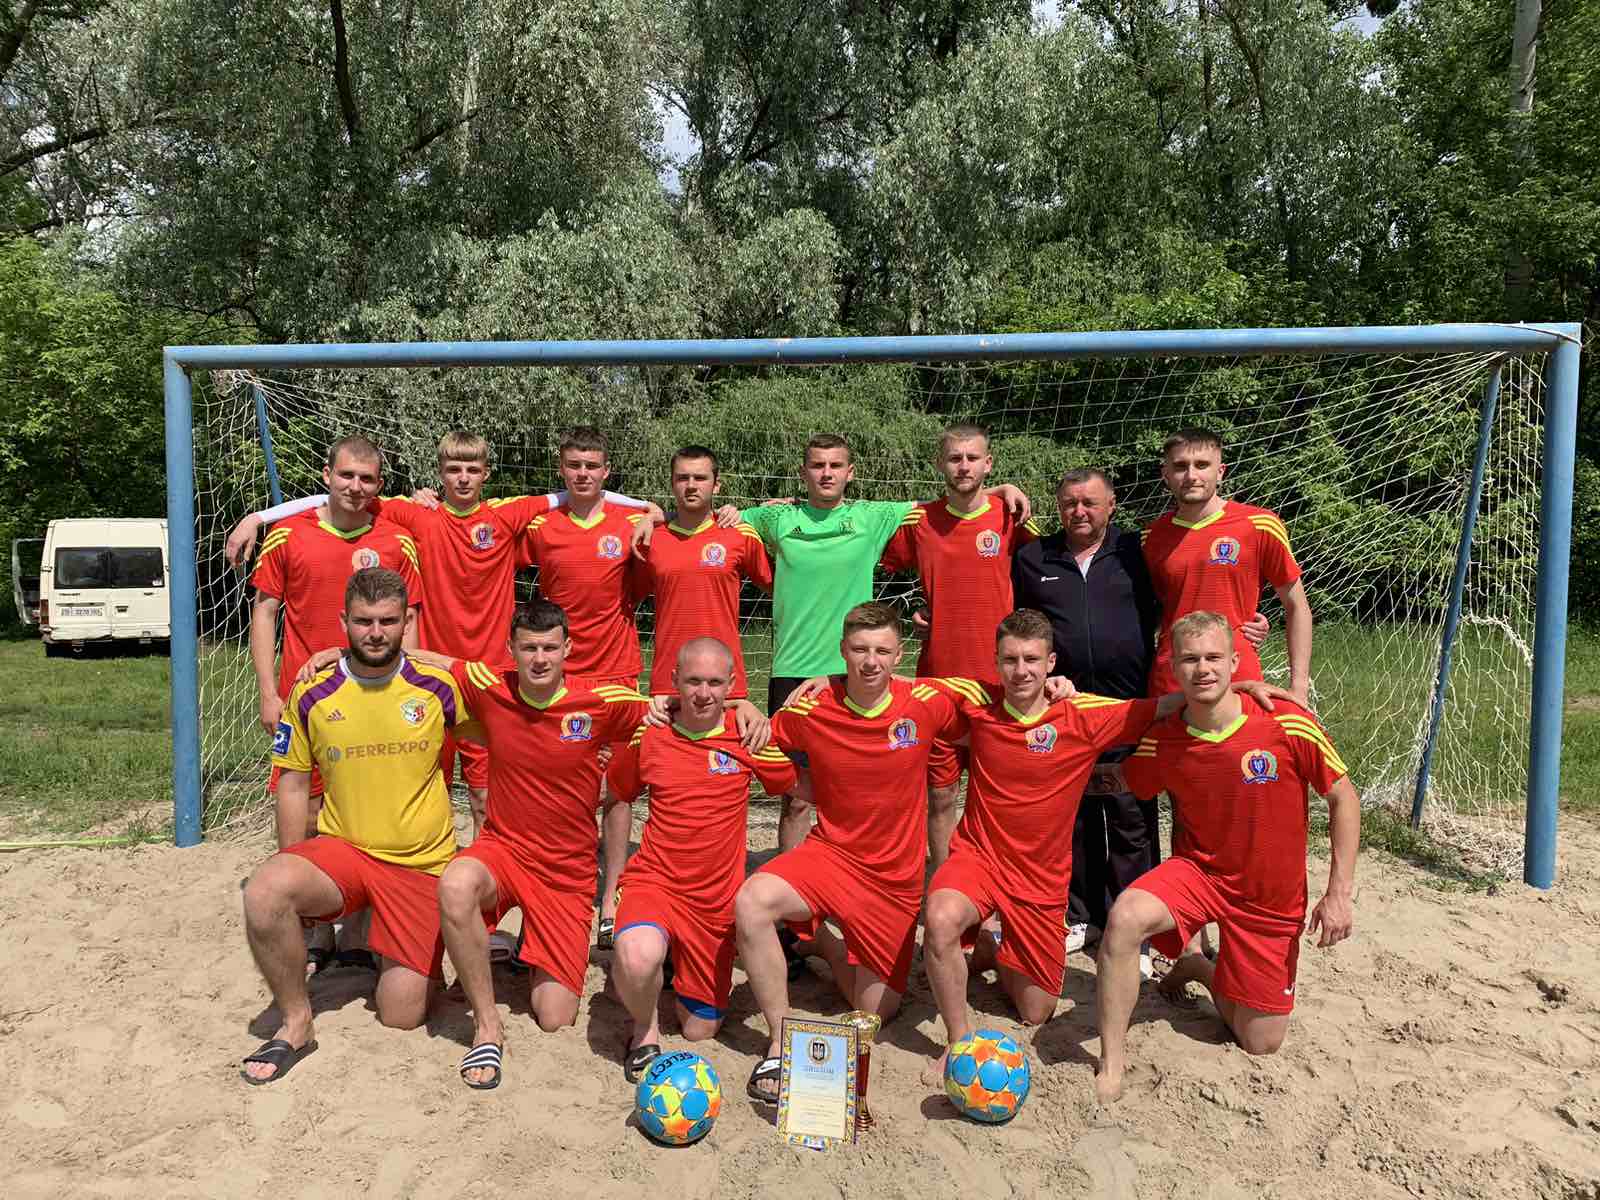 Poltava Polytechnic team becomes the champion of the XVIII Universiade of the Poltava region in men's beach soccer